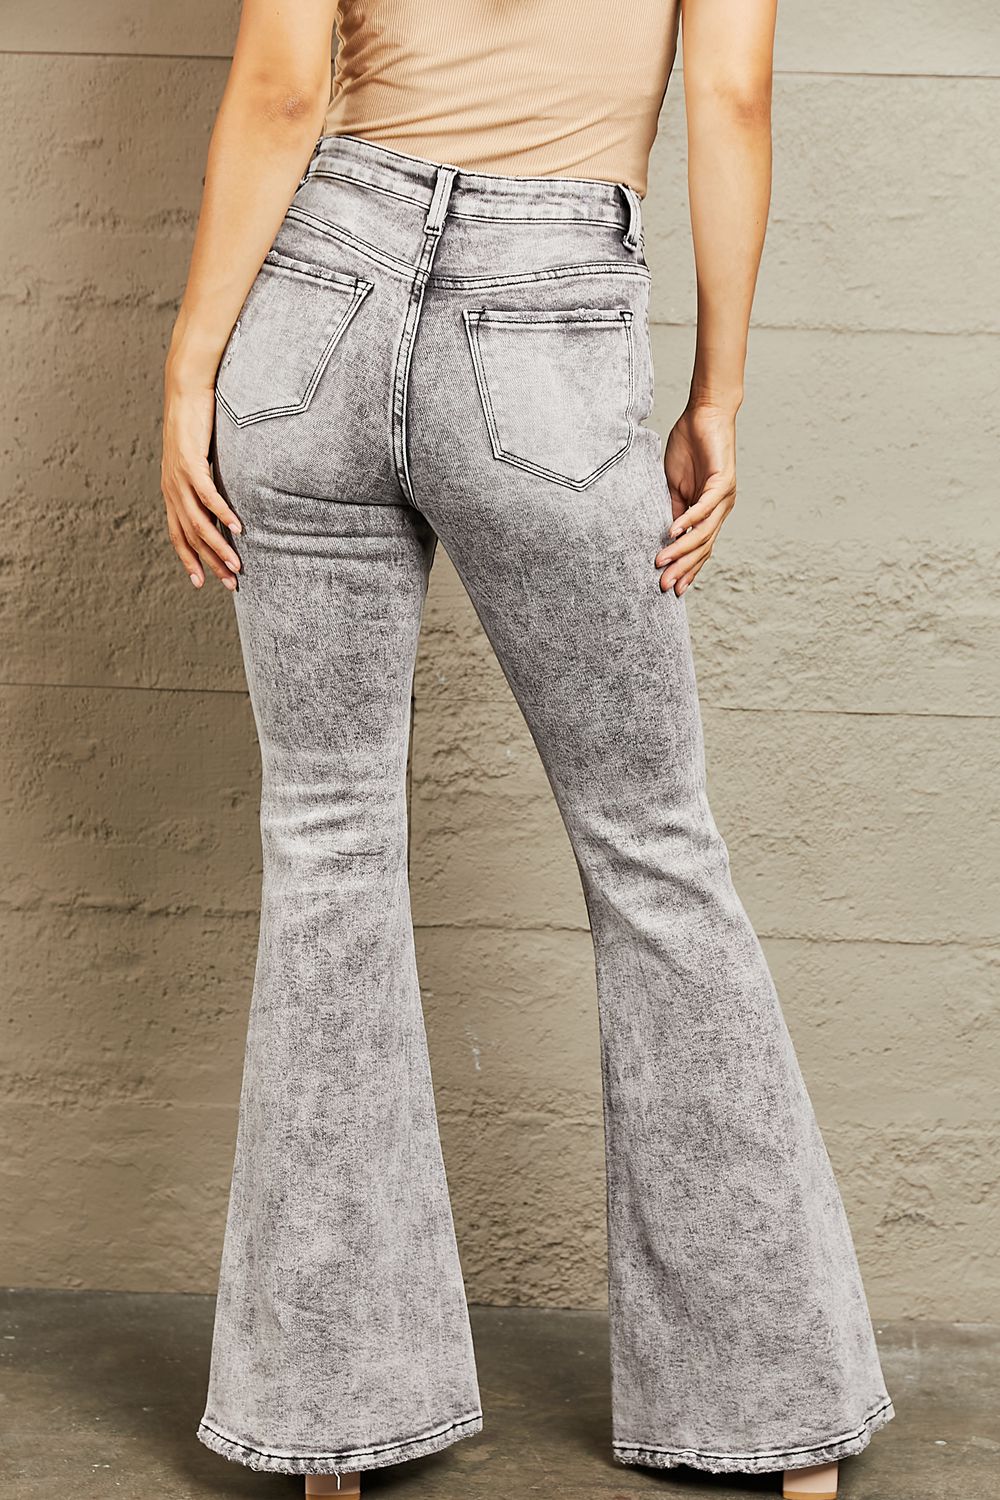 BAYEAS High Waisted Acid Wash Flare Jeans - nailedmoms